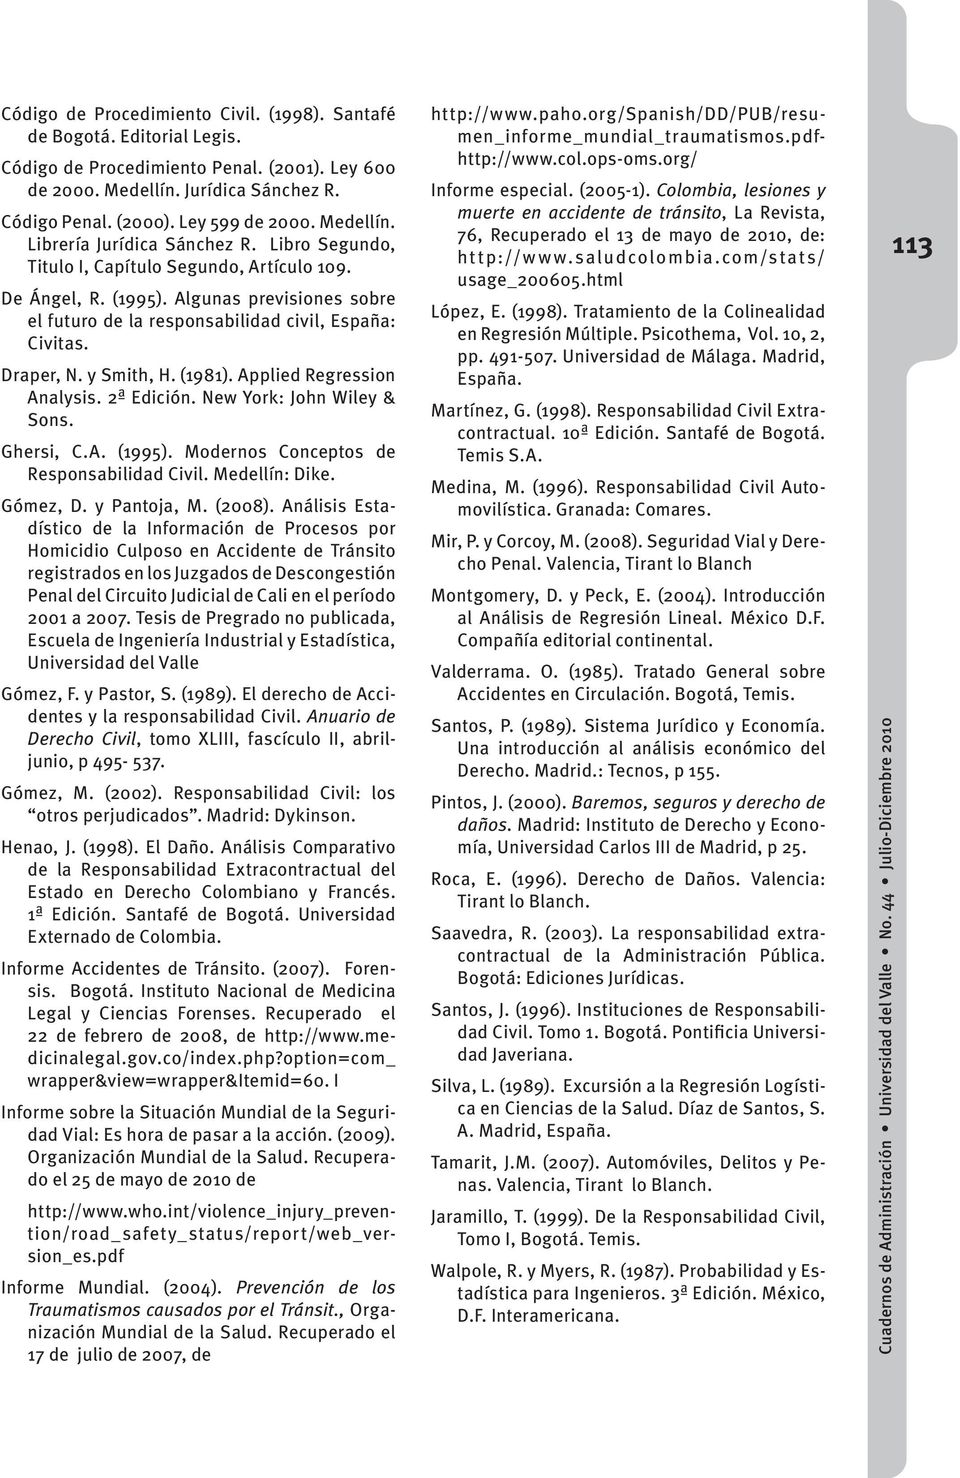 Draper, N. y Smith, H. (1981). Applied Regression Analysis. 2ª Edición. New York: John Wiley & Sons. Ghersi, C.A. (1995). Modernos Conceptos de Responsabilidad Civil. Medellín: Dike. Gómez, D.